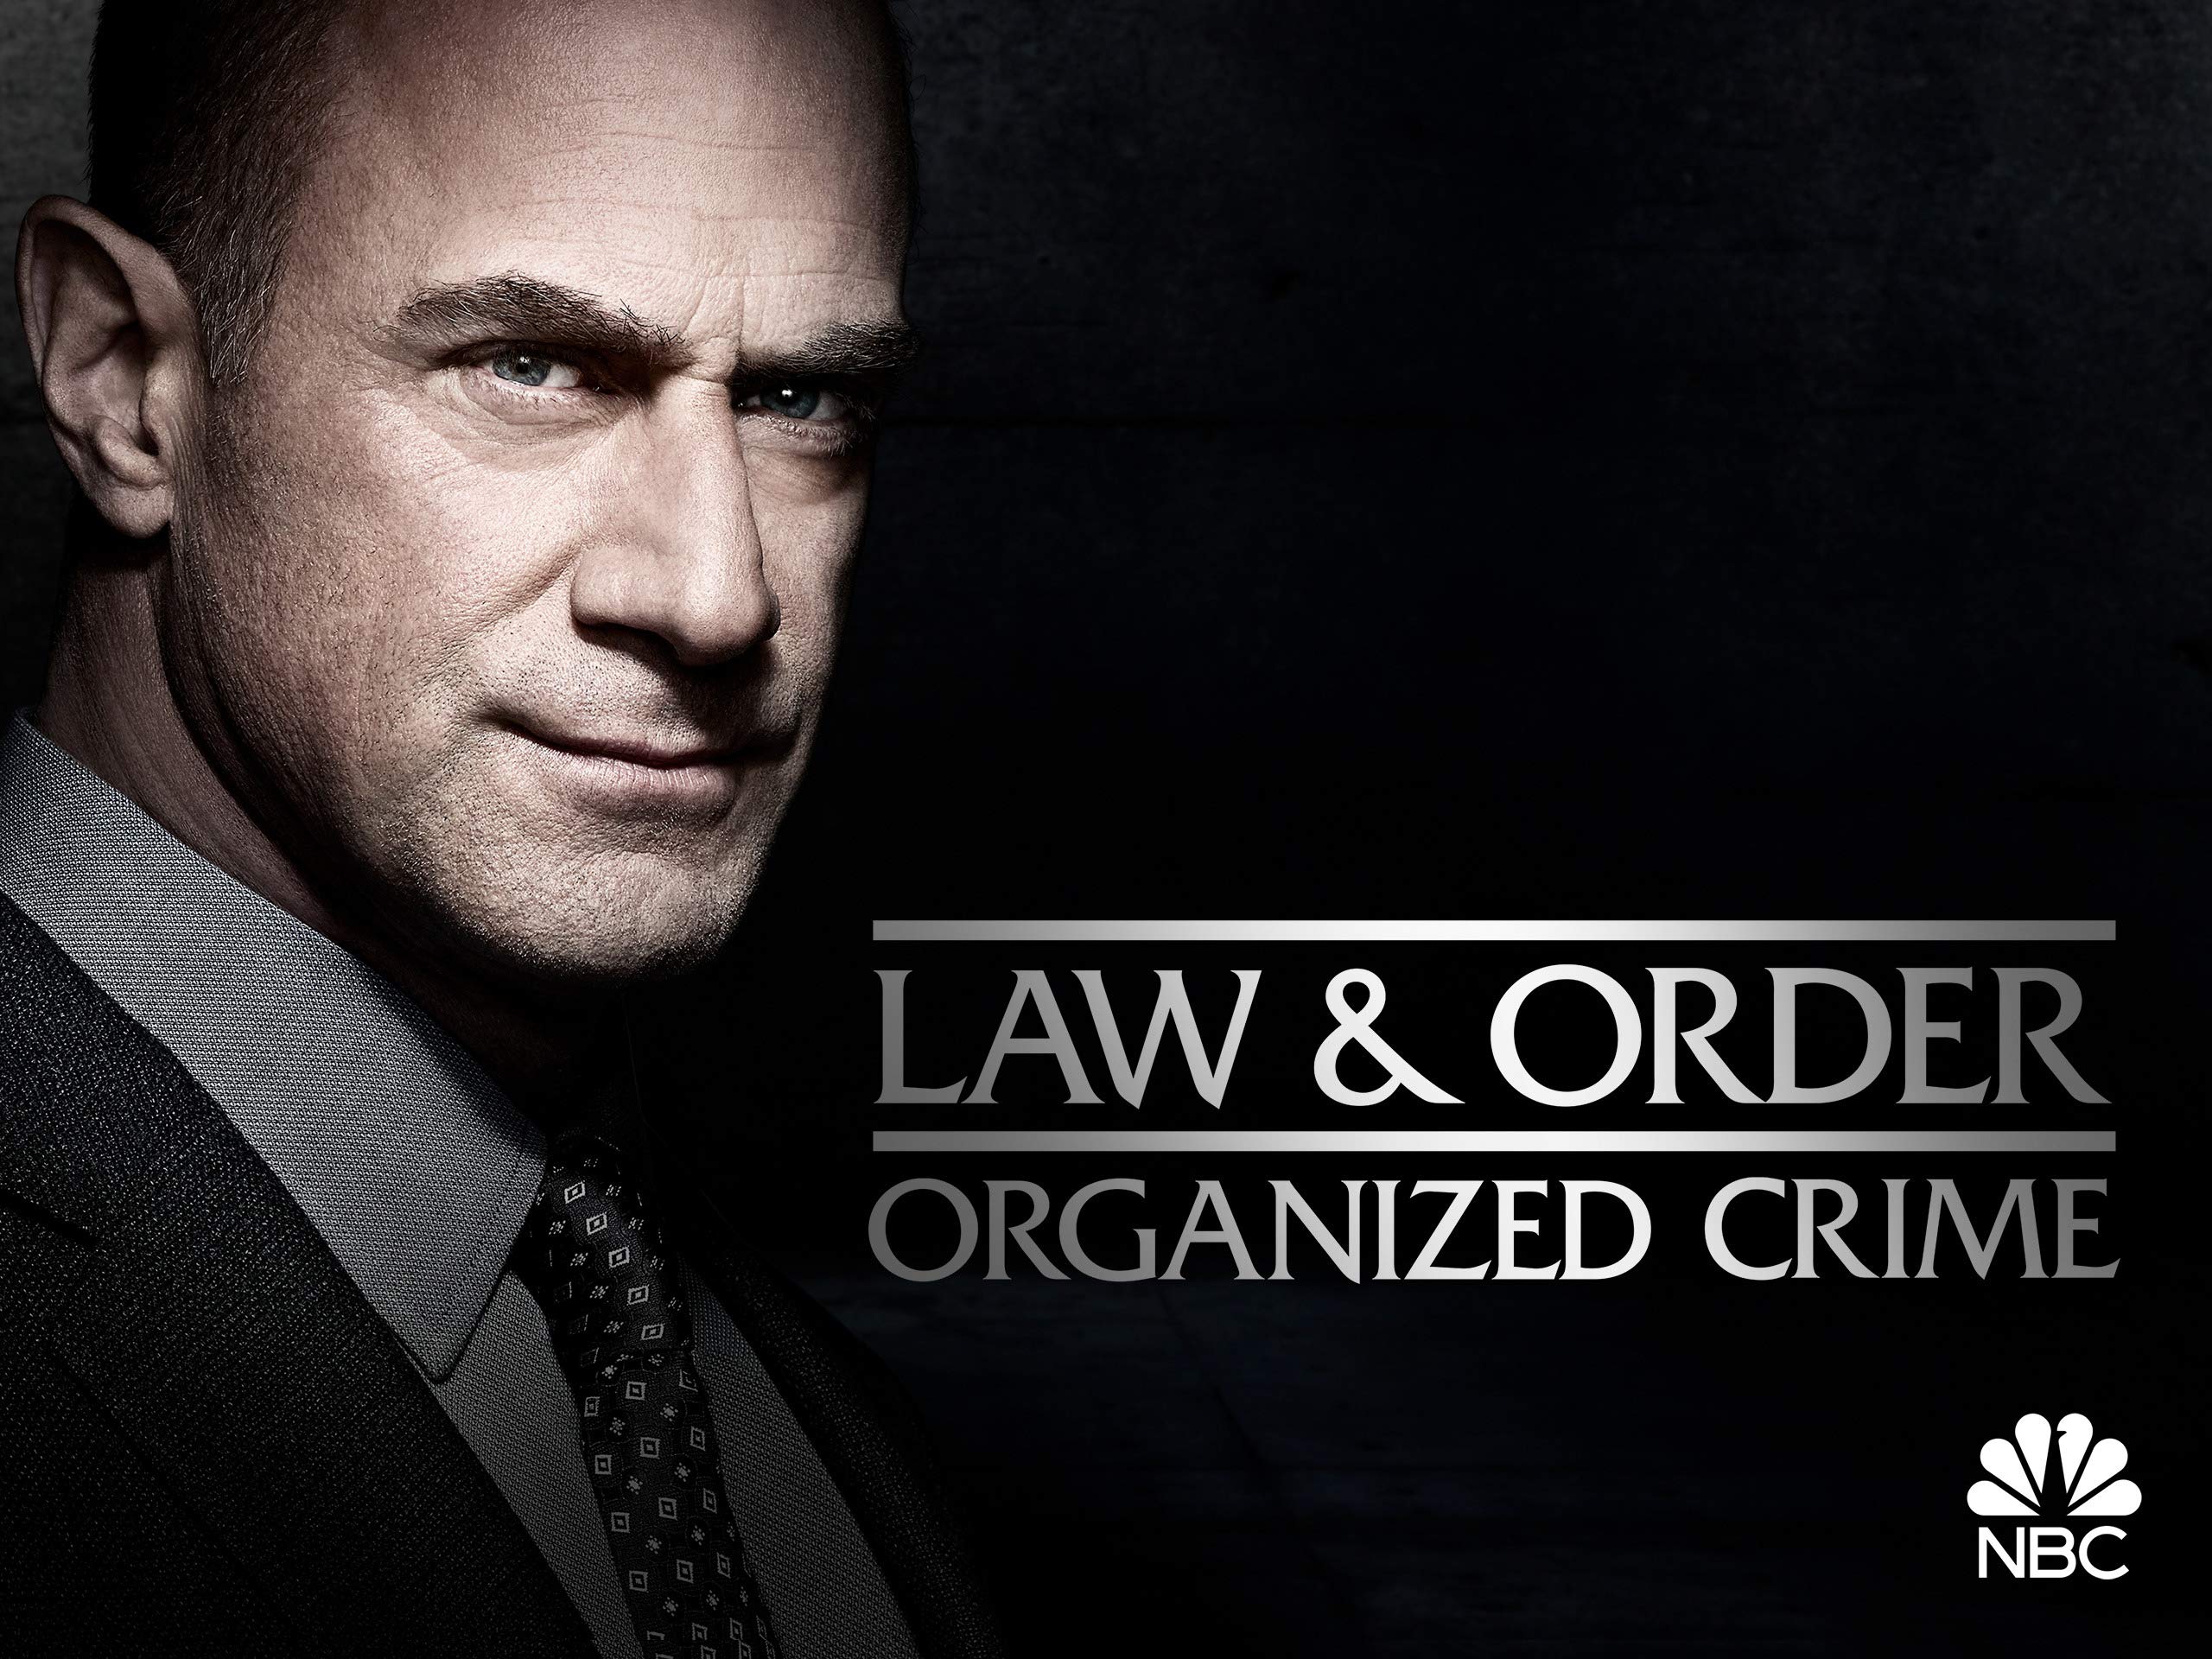 Law & Order Organized Crime